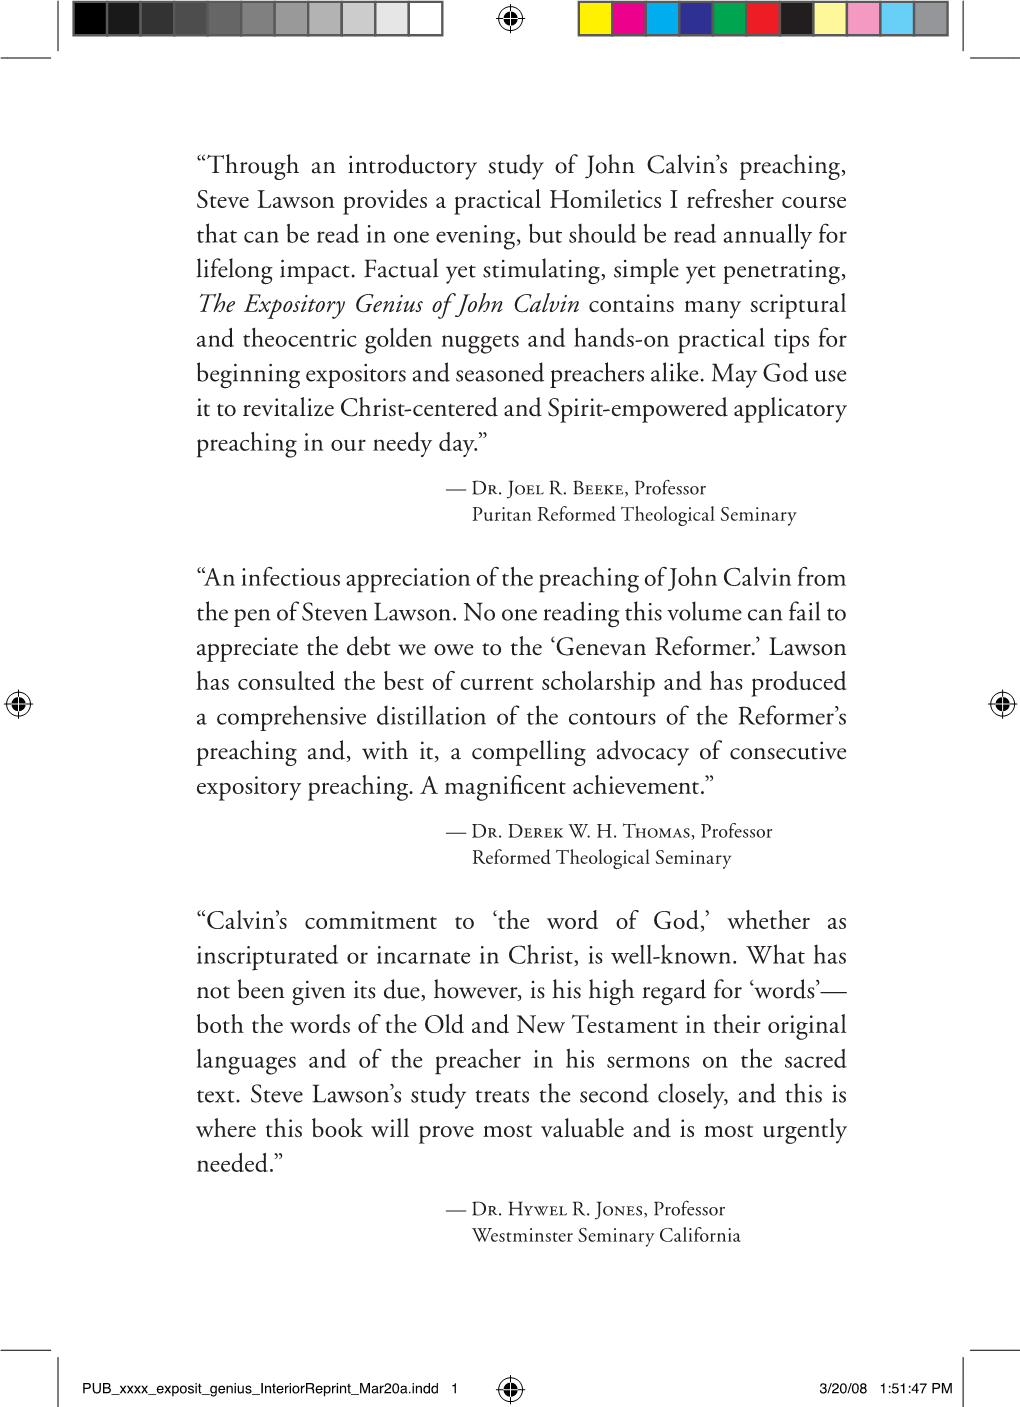 “Through an Introductory Study of John Calvin's Preaching, Steve Lawson